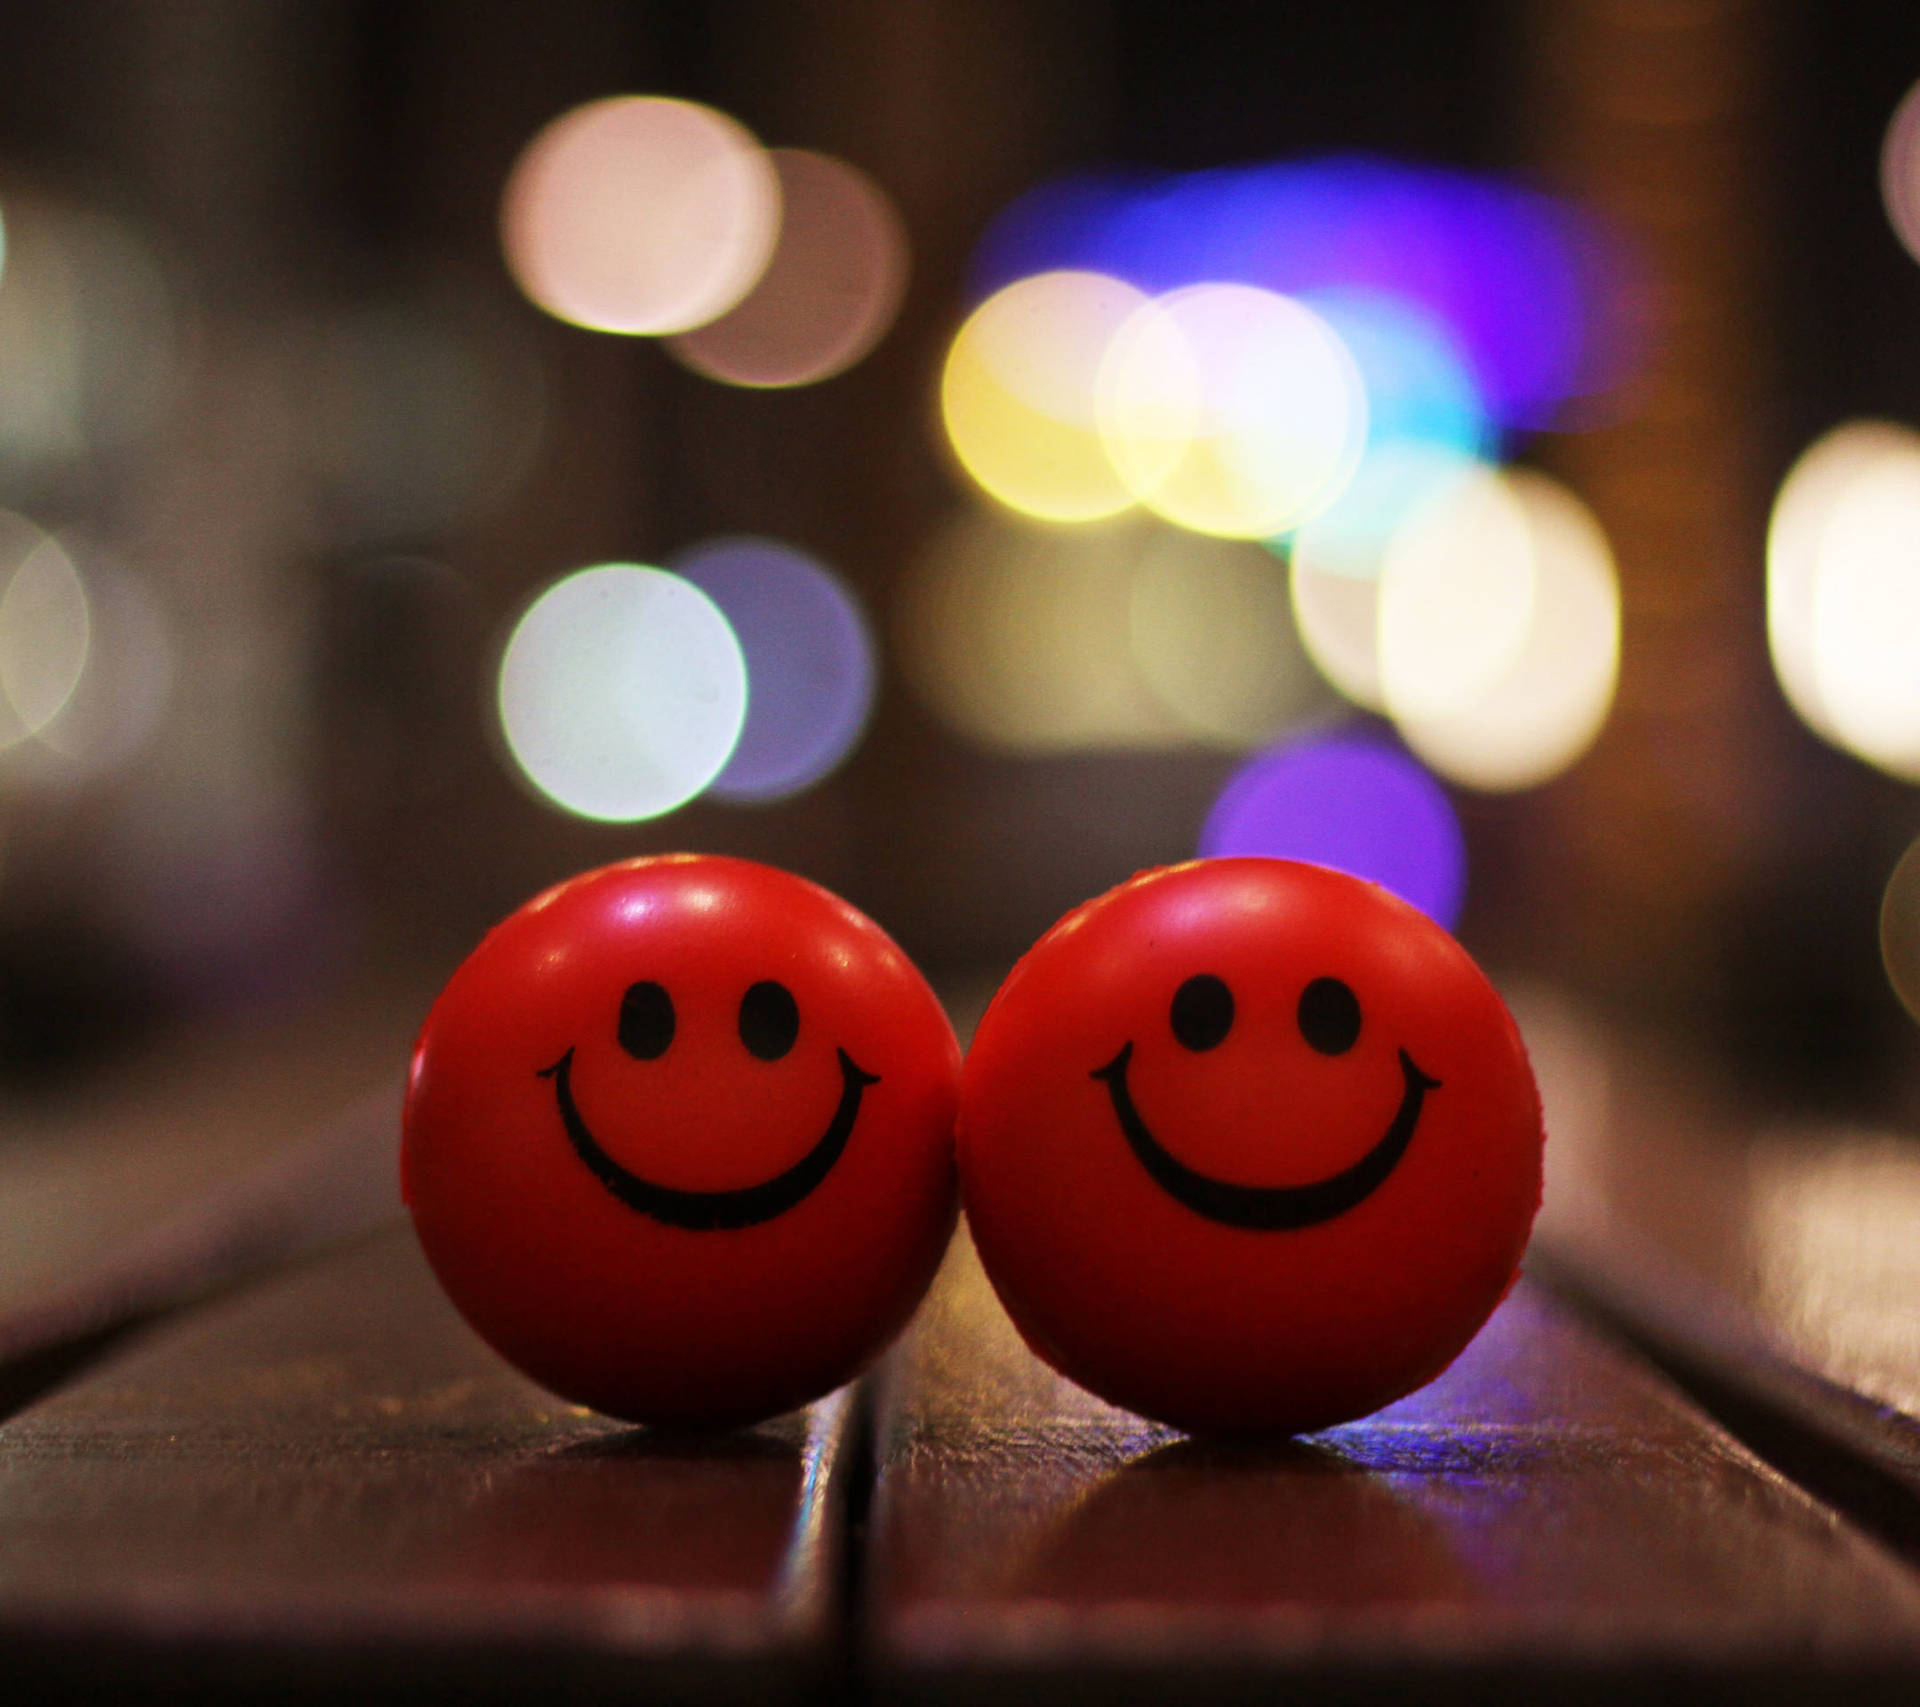 Red Stress Balls Smile